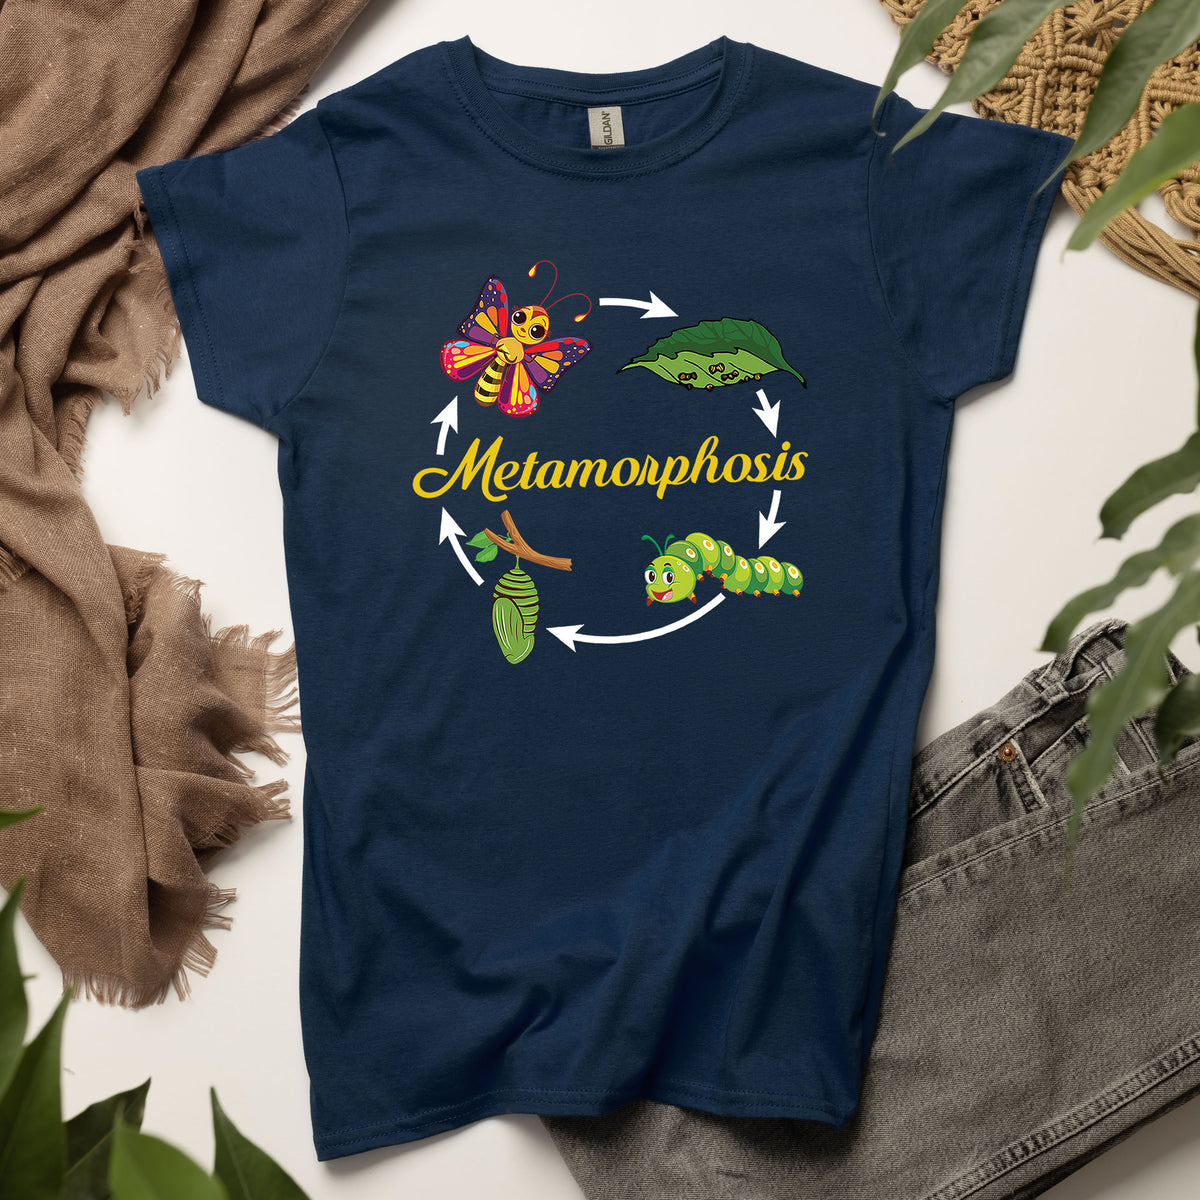 Metamorphosis Life Cycle Biology Shirts | Women's Slim-Fit Navy T-shirt